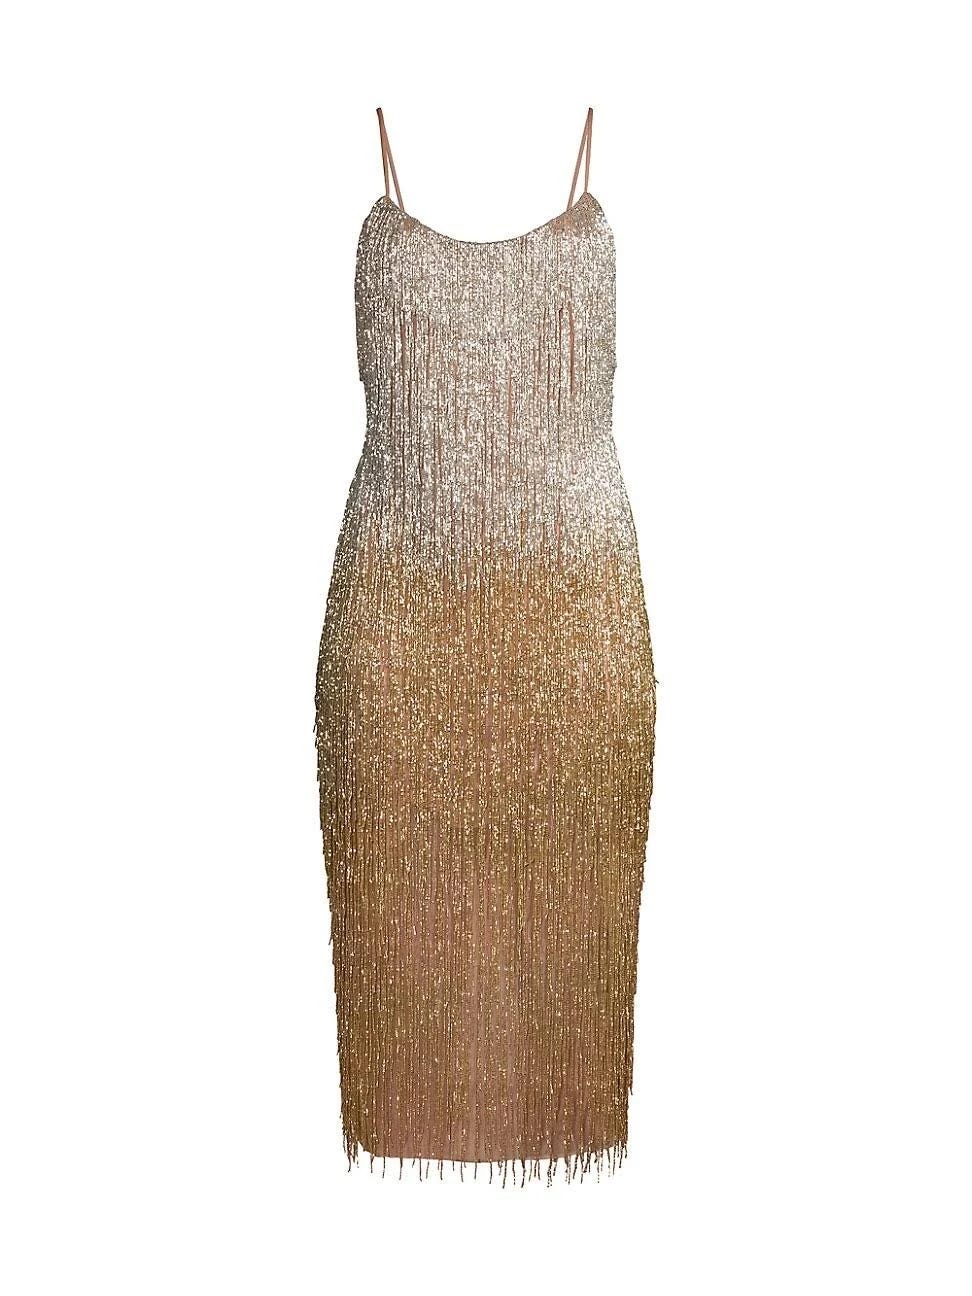 Metallic Ombré Beaded Midi-dress by Liv Foster - Size 12 | Image